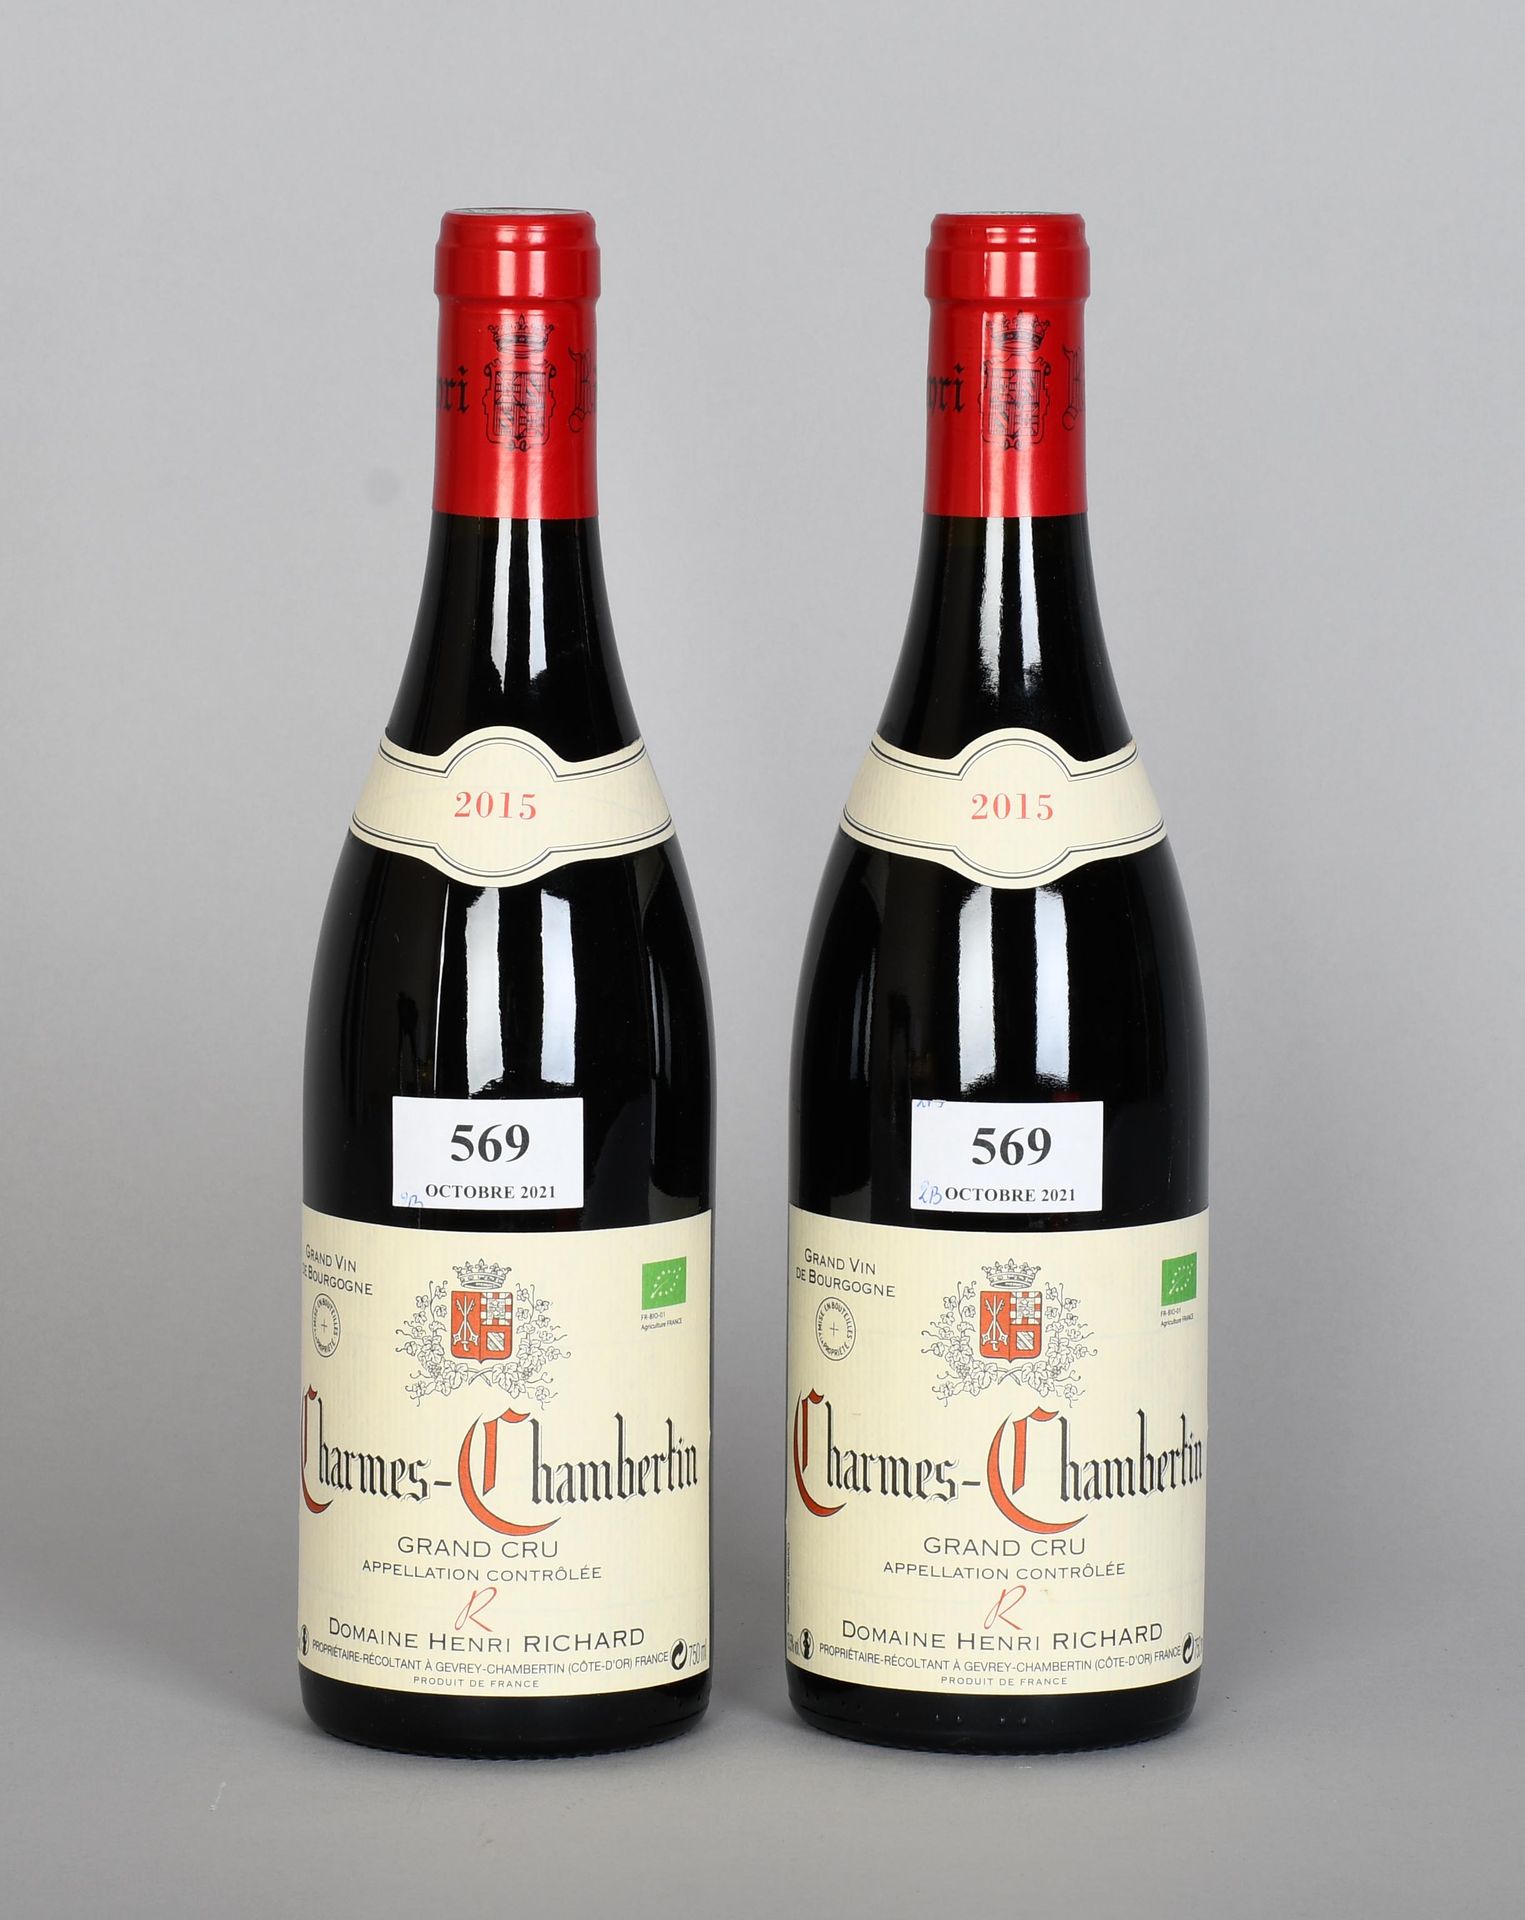 Null Charmes-Chambertin 2015 - Mise propriété - Two bottles of wine

Grand cru. &hellip;